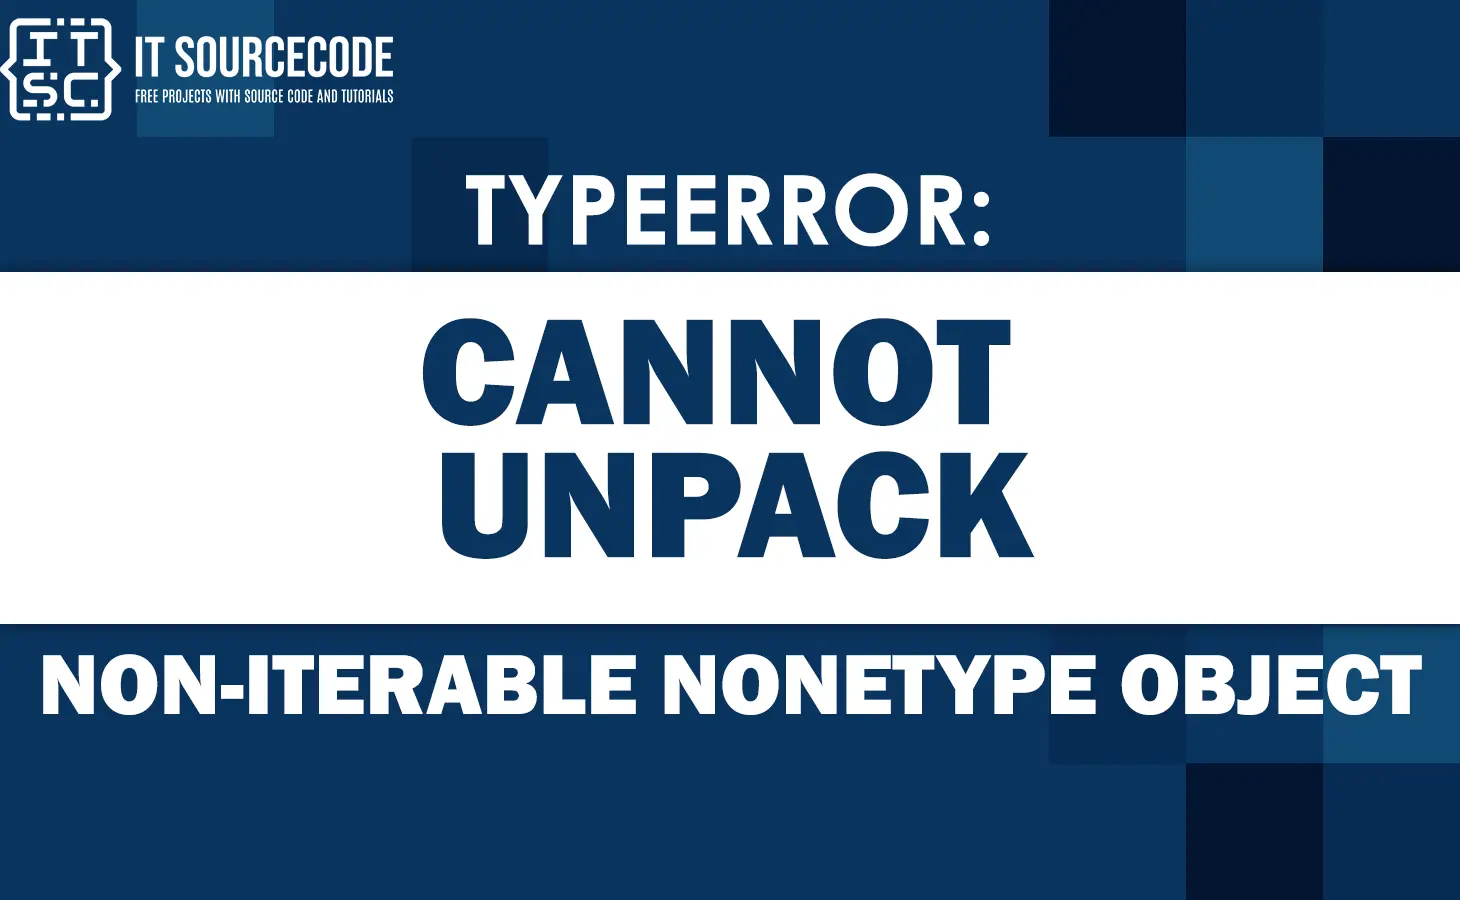 Typeerror cannot unpack non-iterable nonetype object